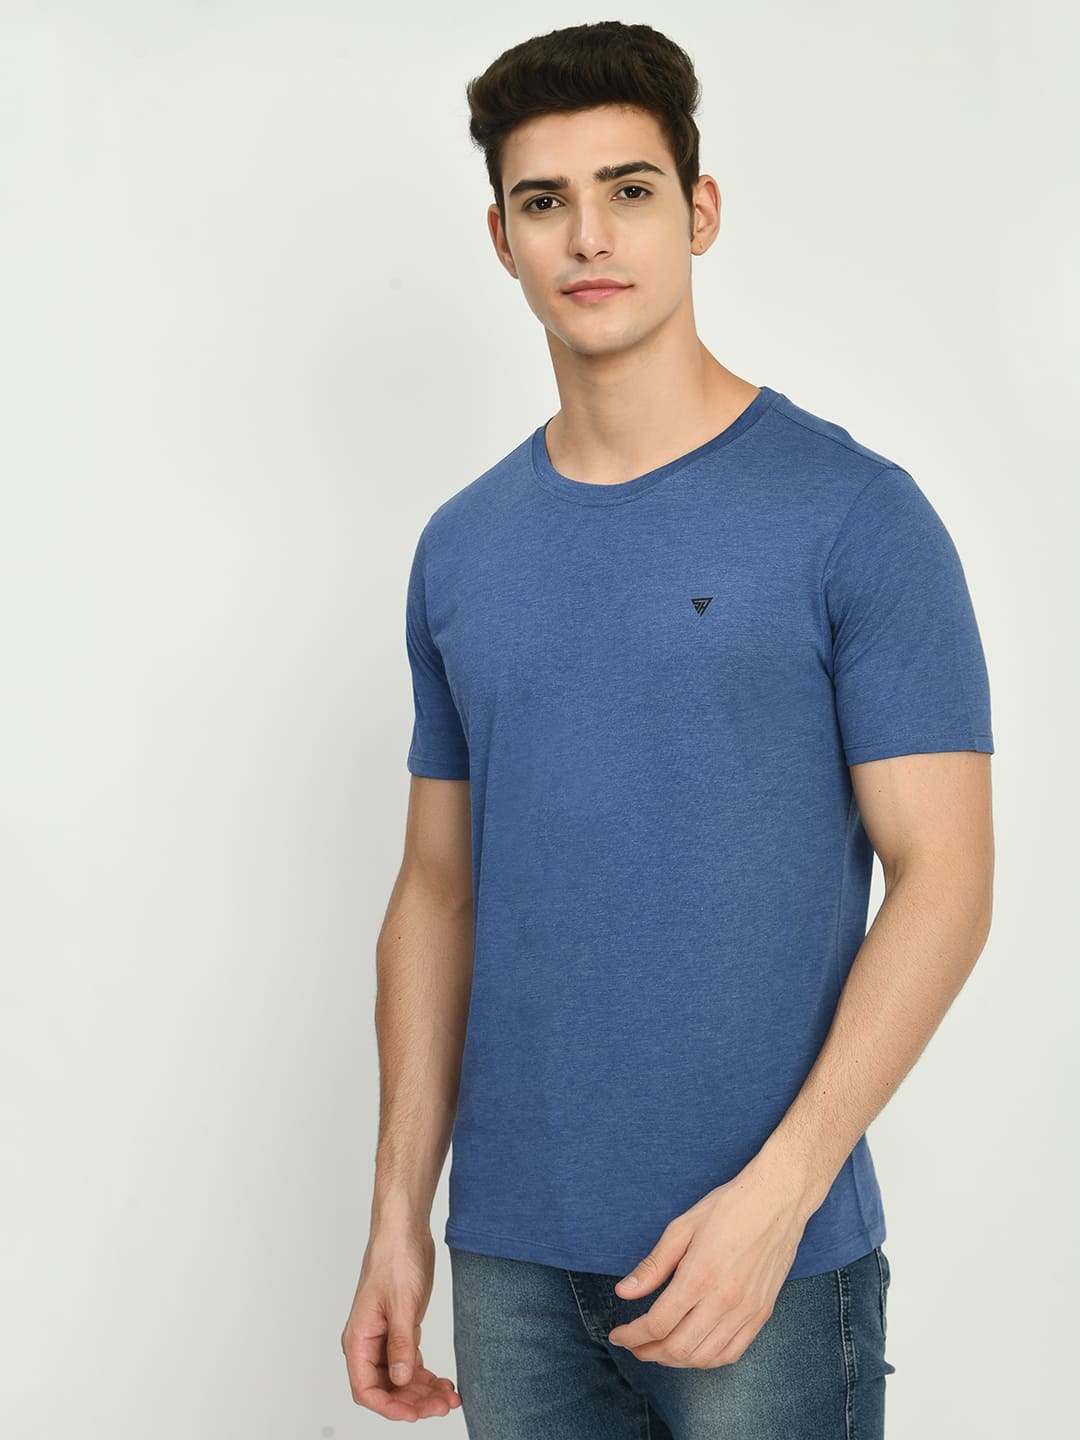 Men's Blue Solid Round Neck T-Shirt